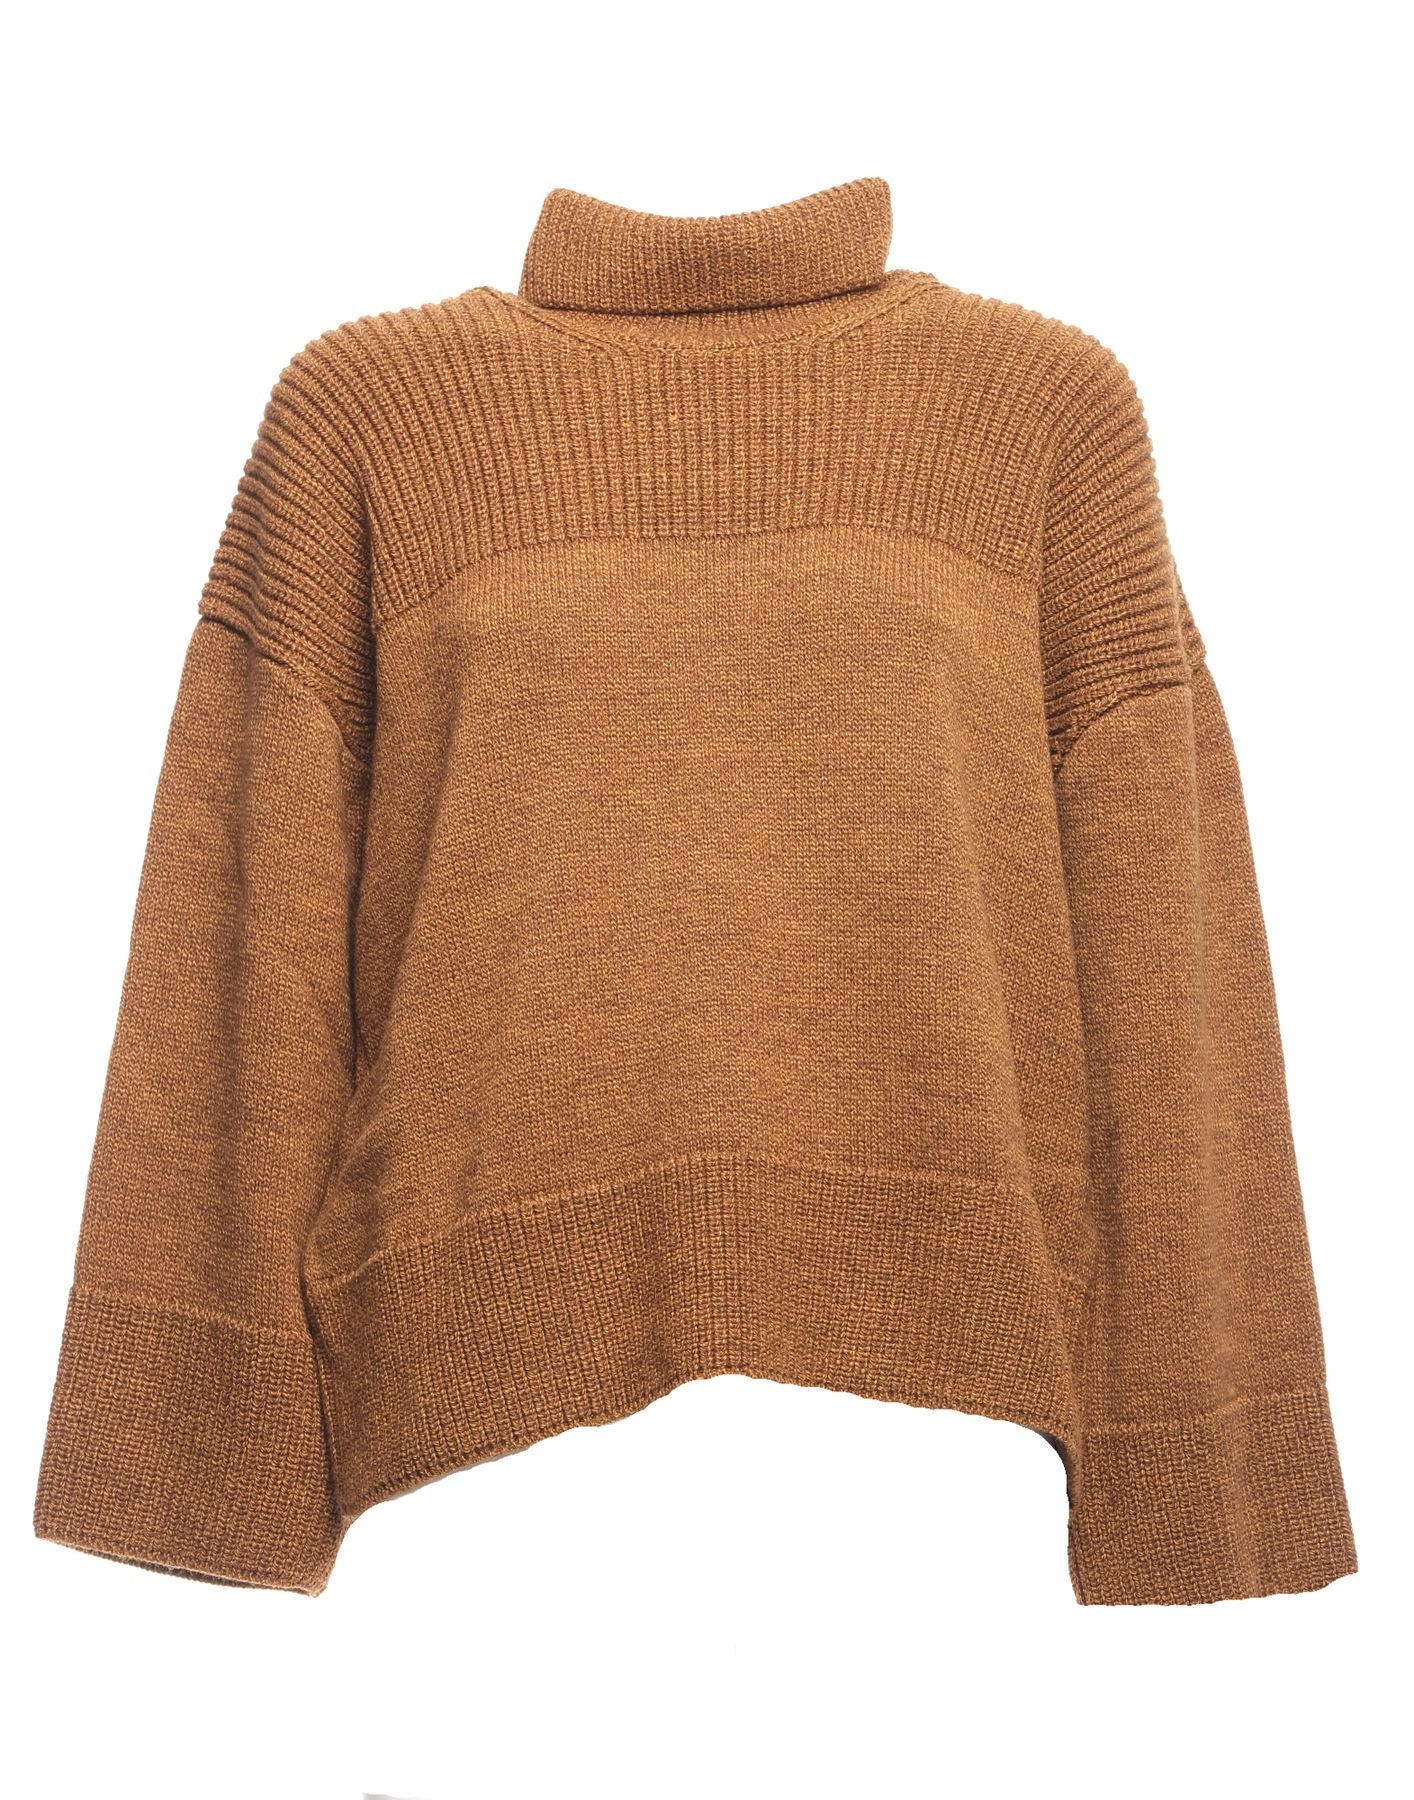 Sweater for woman MGKD03038 MORO Akep